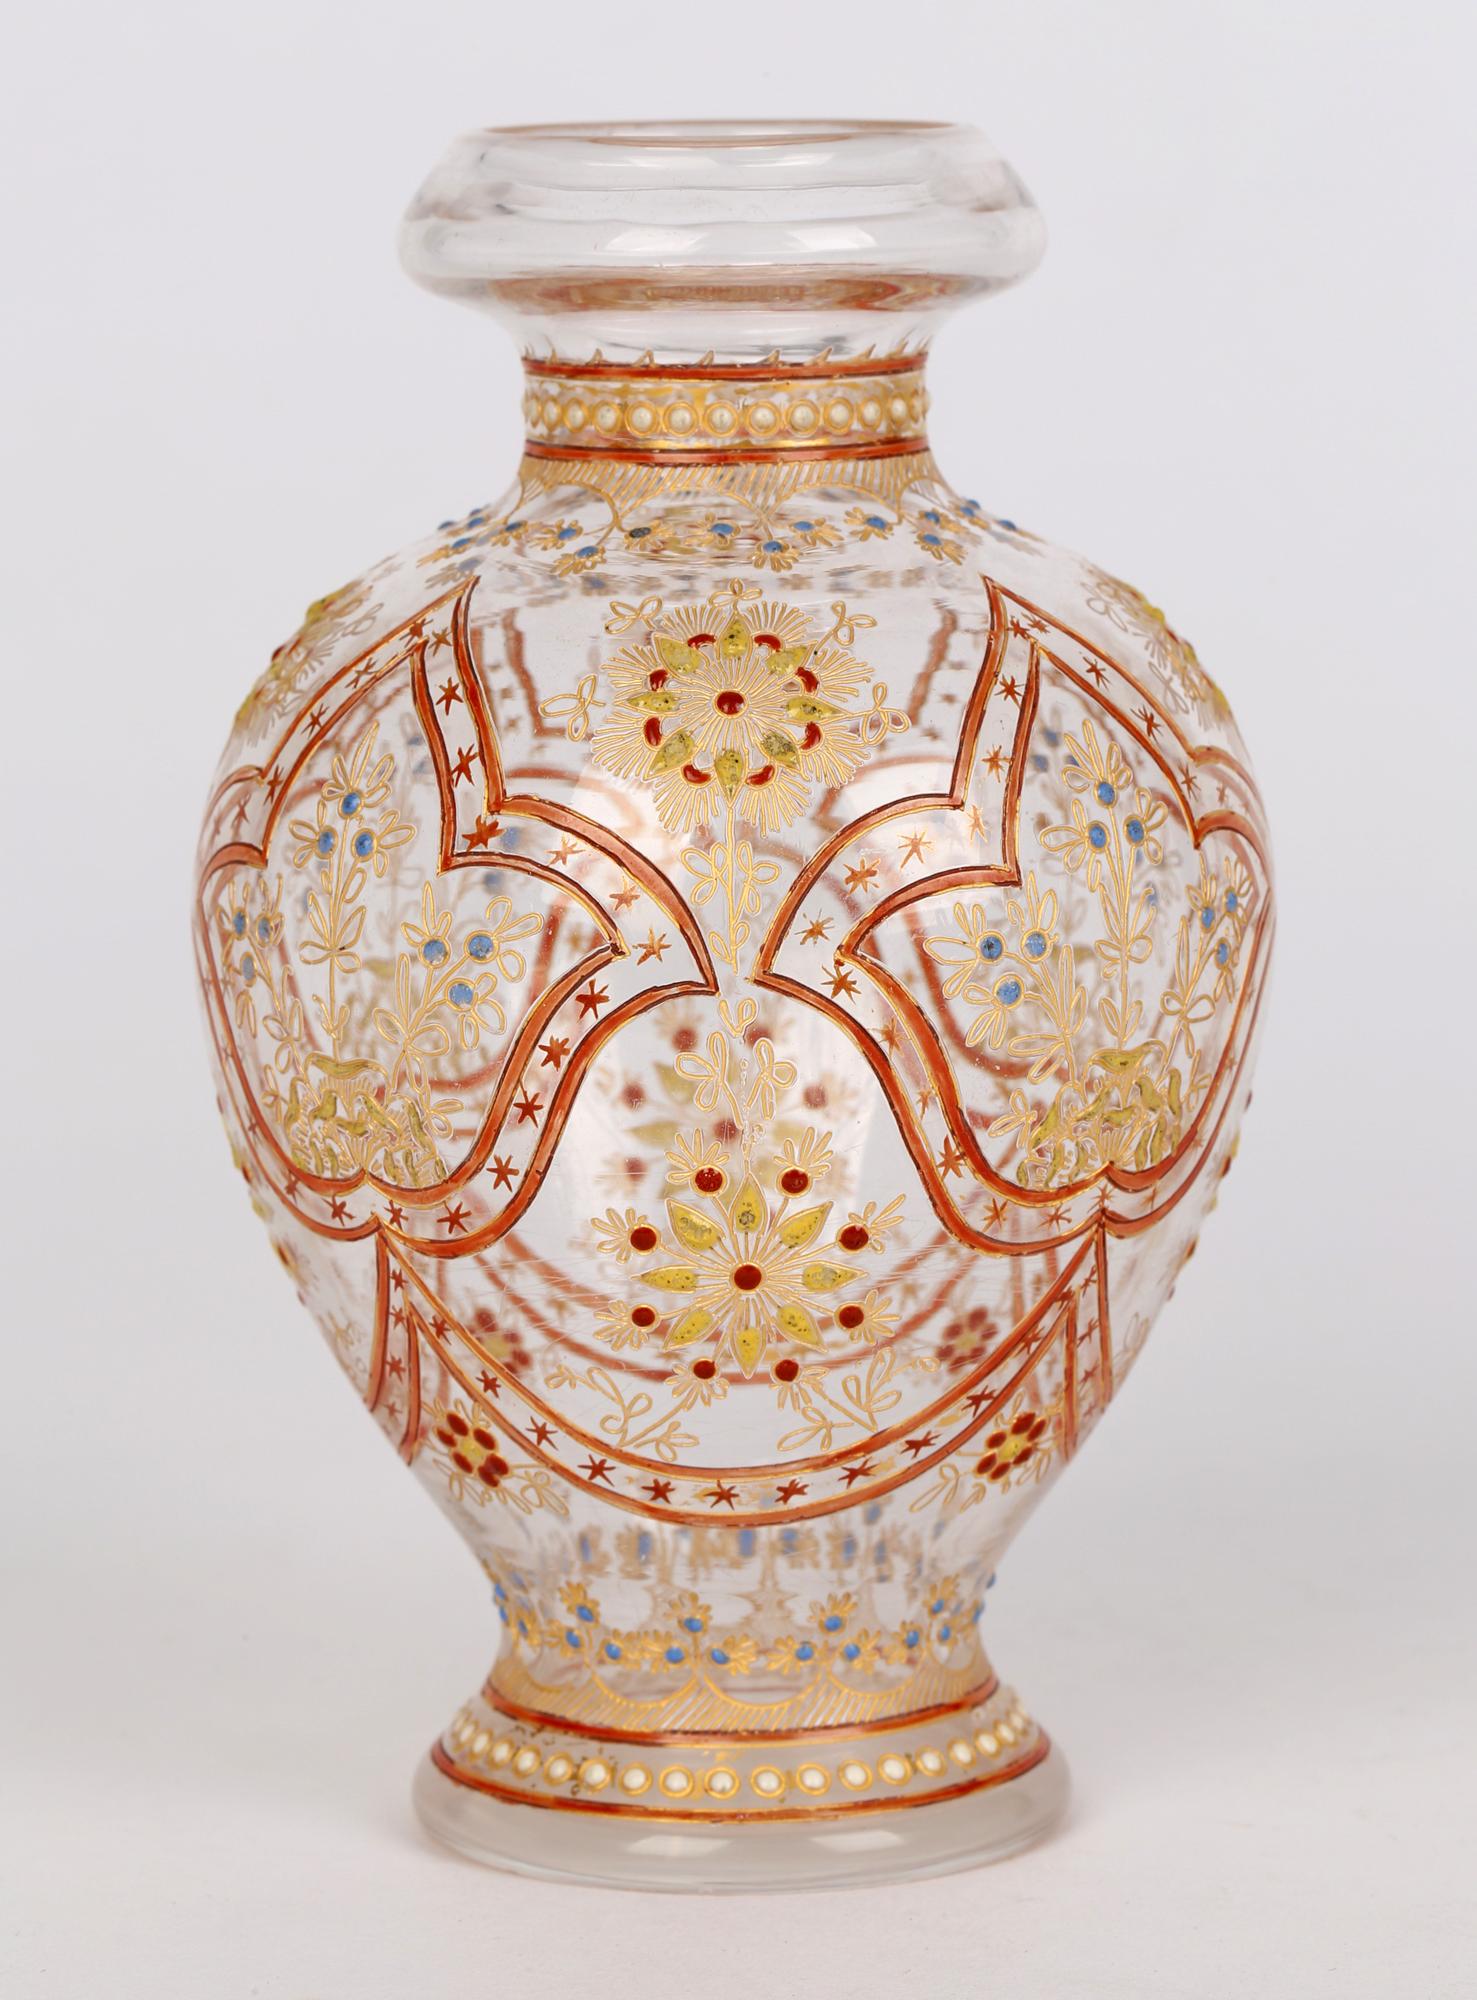 J & L Lobmeyr Viennese Enamelled Persian-Style Glass Vase For Sale 7